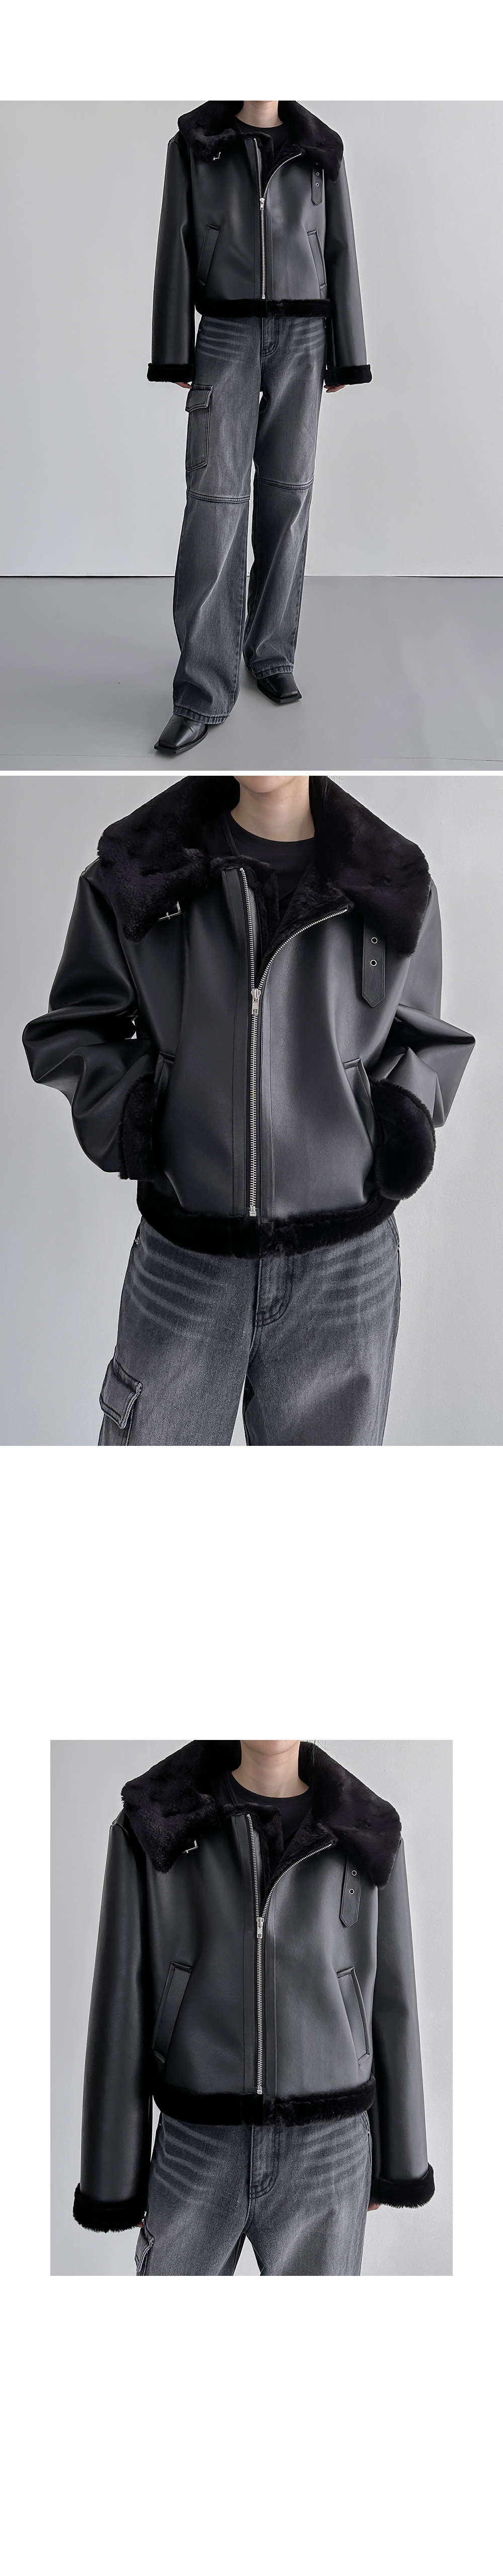 Jacket grey color image-S1L5